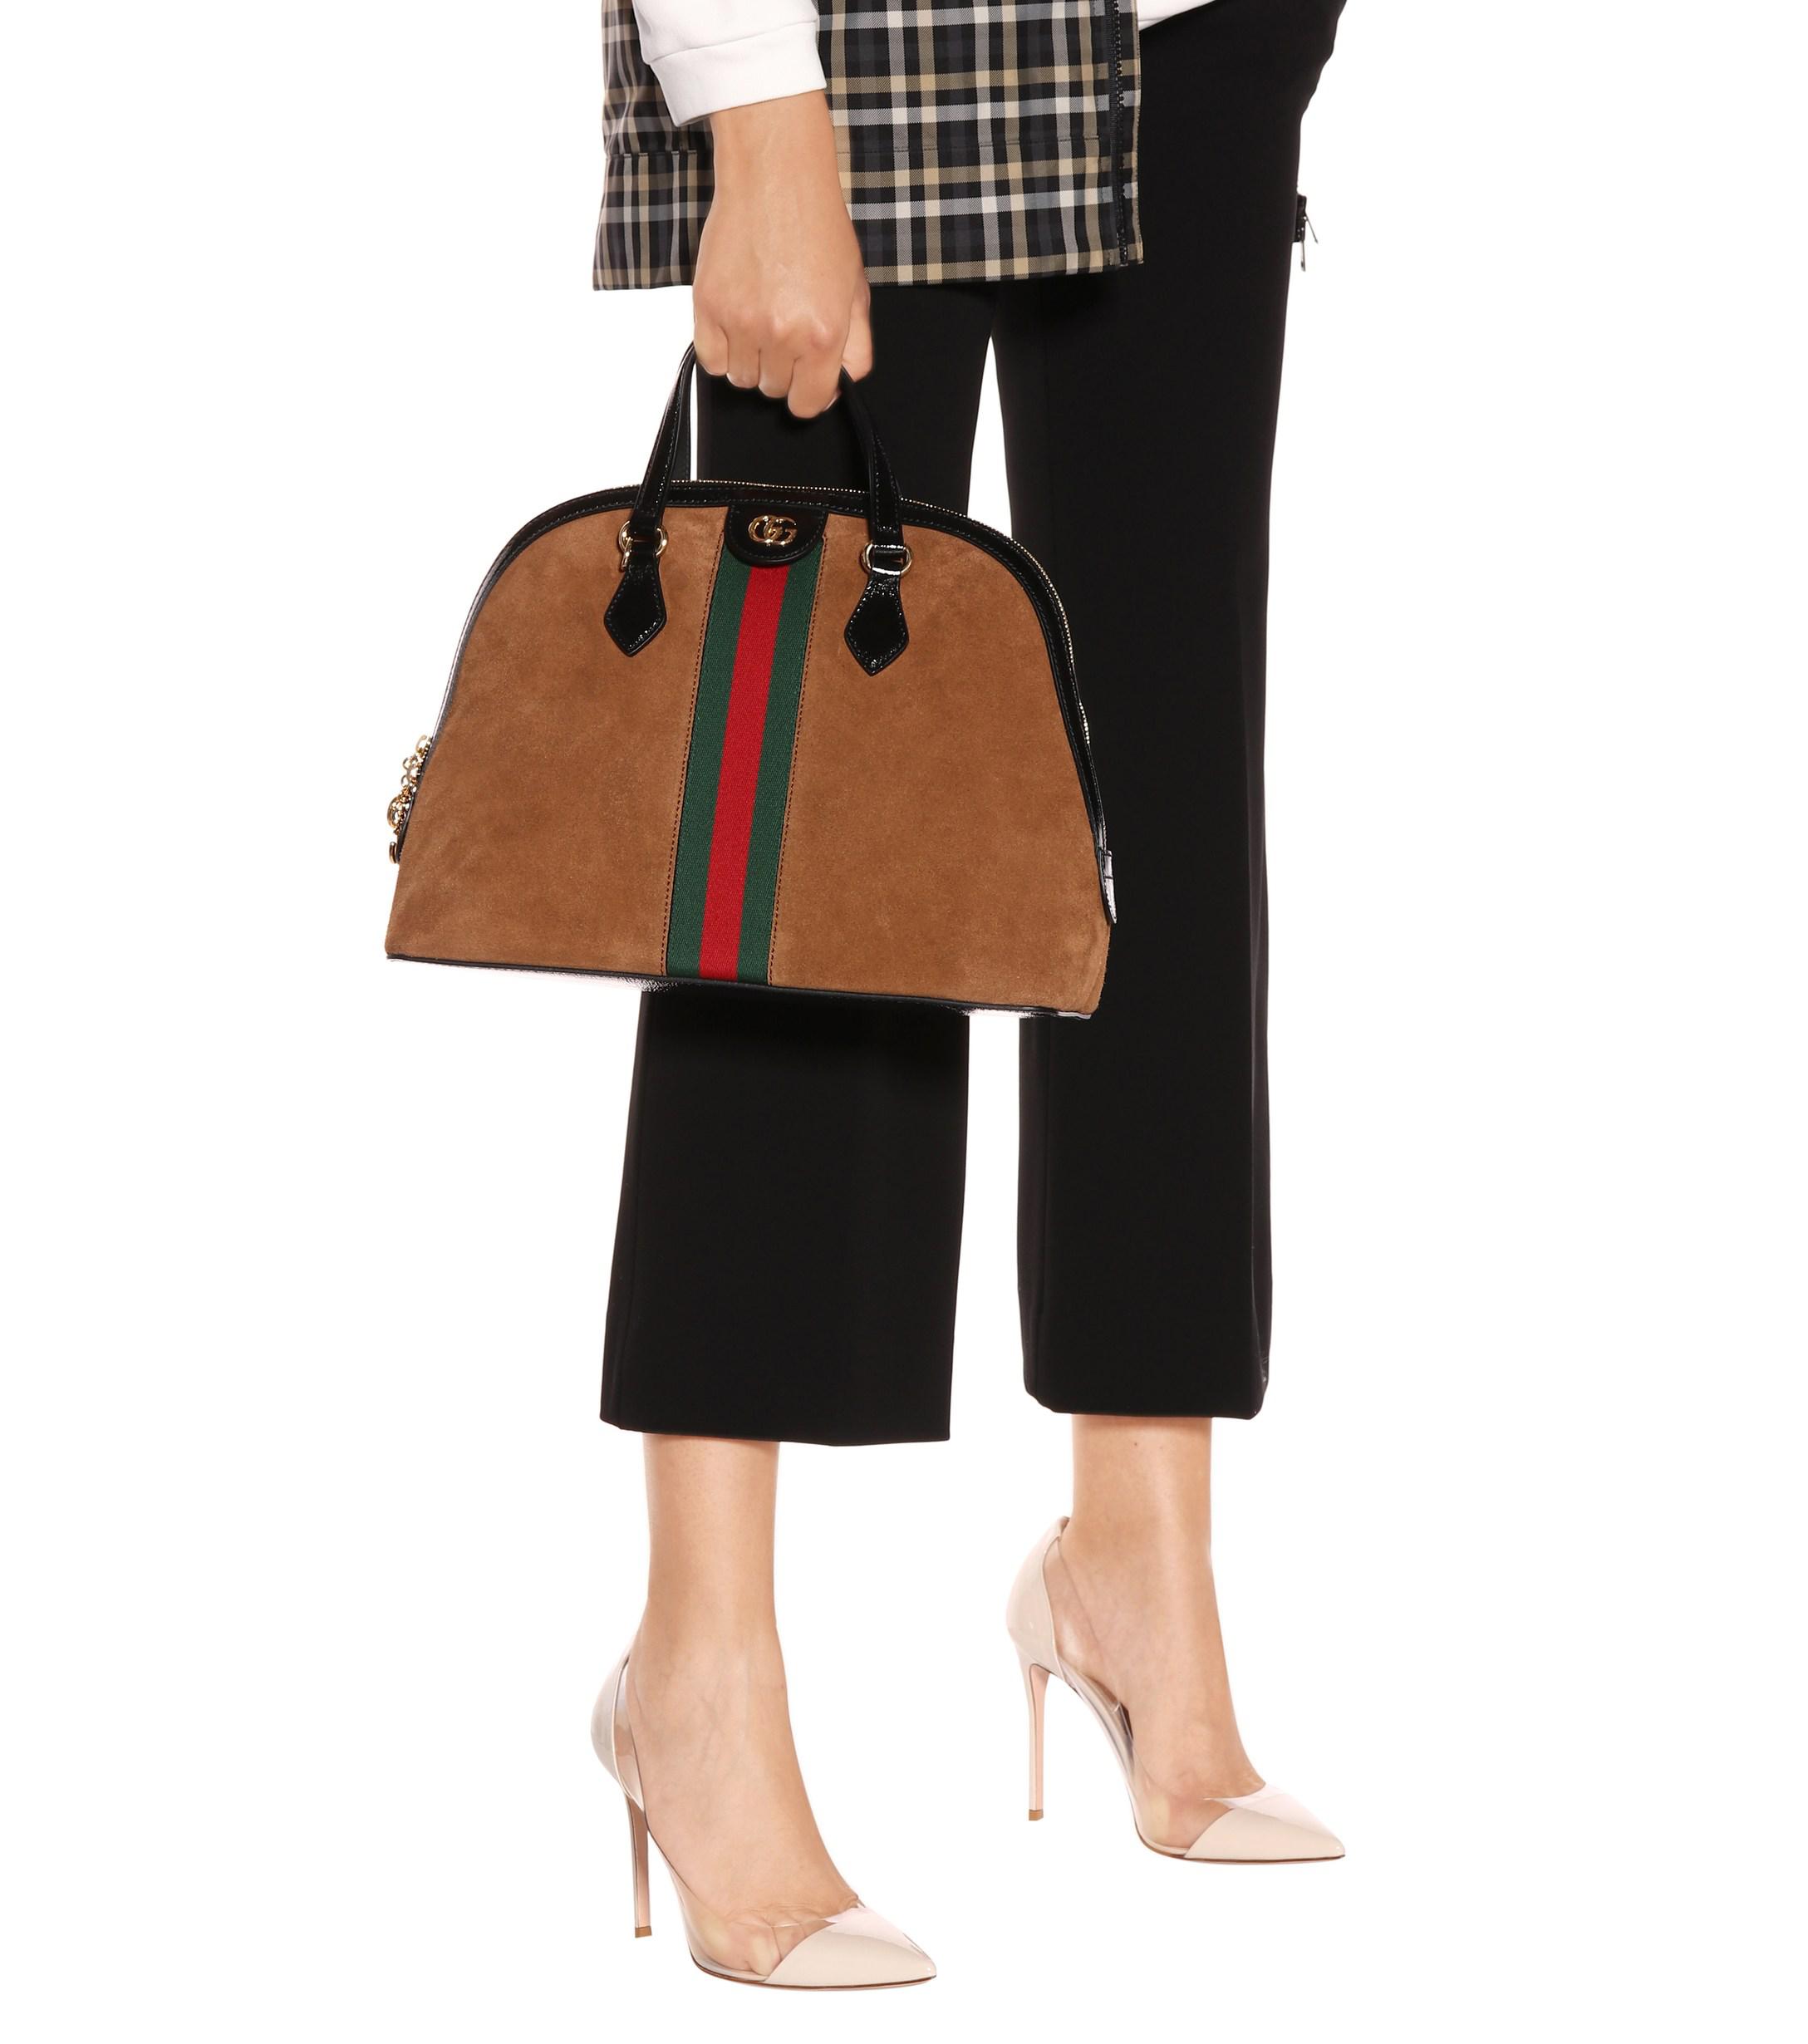 Gucci Ophidia Medium Suede Shoulder Bag in Brown - Lyst